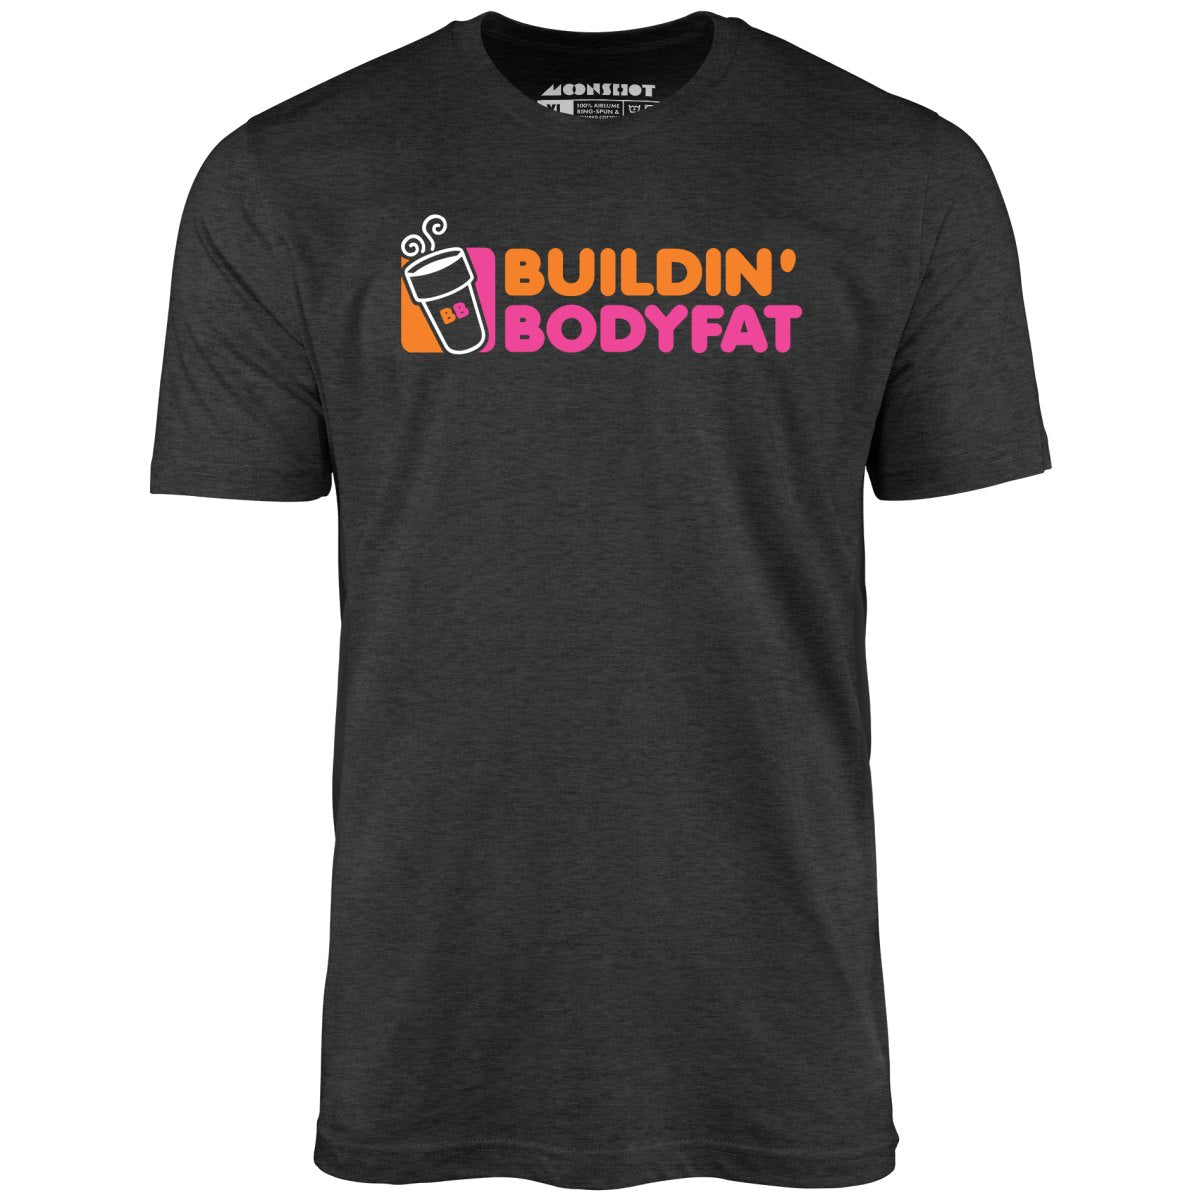 Buildin' Bodyfat - Unisex T-Shirt